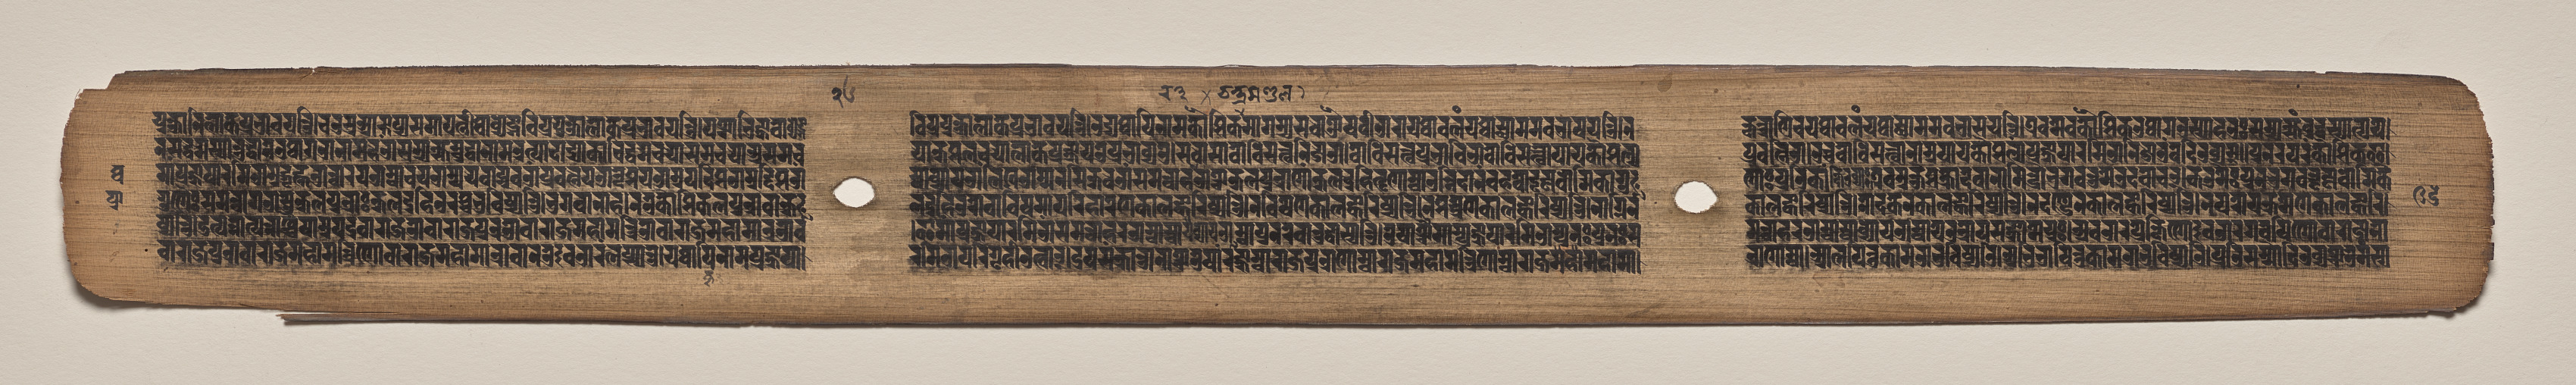 Text, Folio 26 (verso), from a Manuscript of the Perfection of Wisdom in Eight Thousand Lines (Ashtasahasrika Prajnaparamita-sutra)